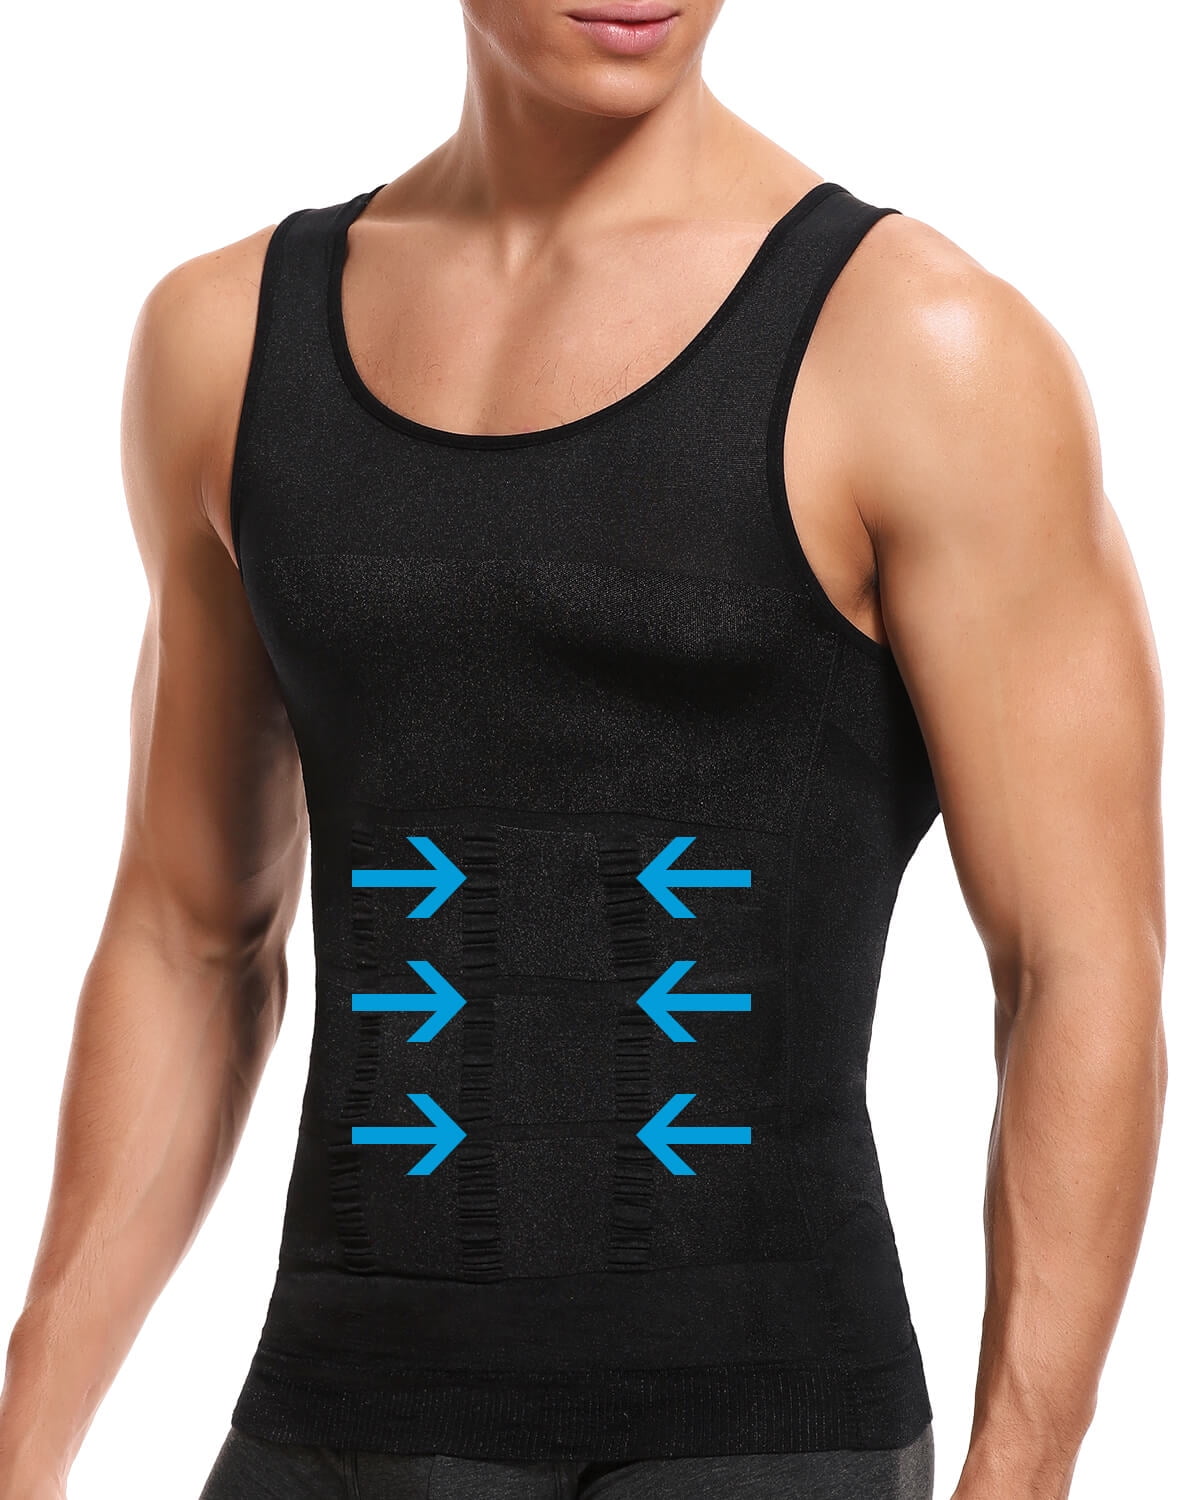 Vaslanda Men's Slimming Body Shaper Vest Compression Shirt Gym Workout Tank  Top Sleeveless Abdomen Shapewear 